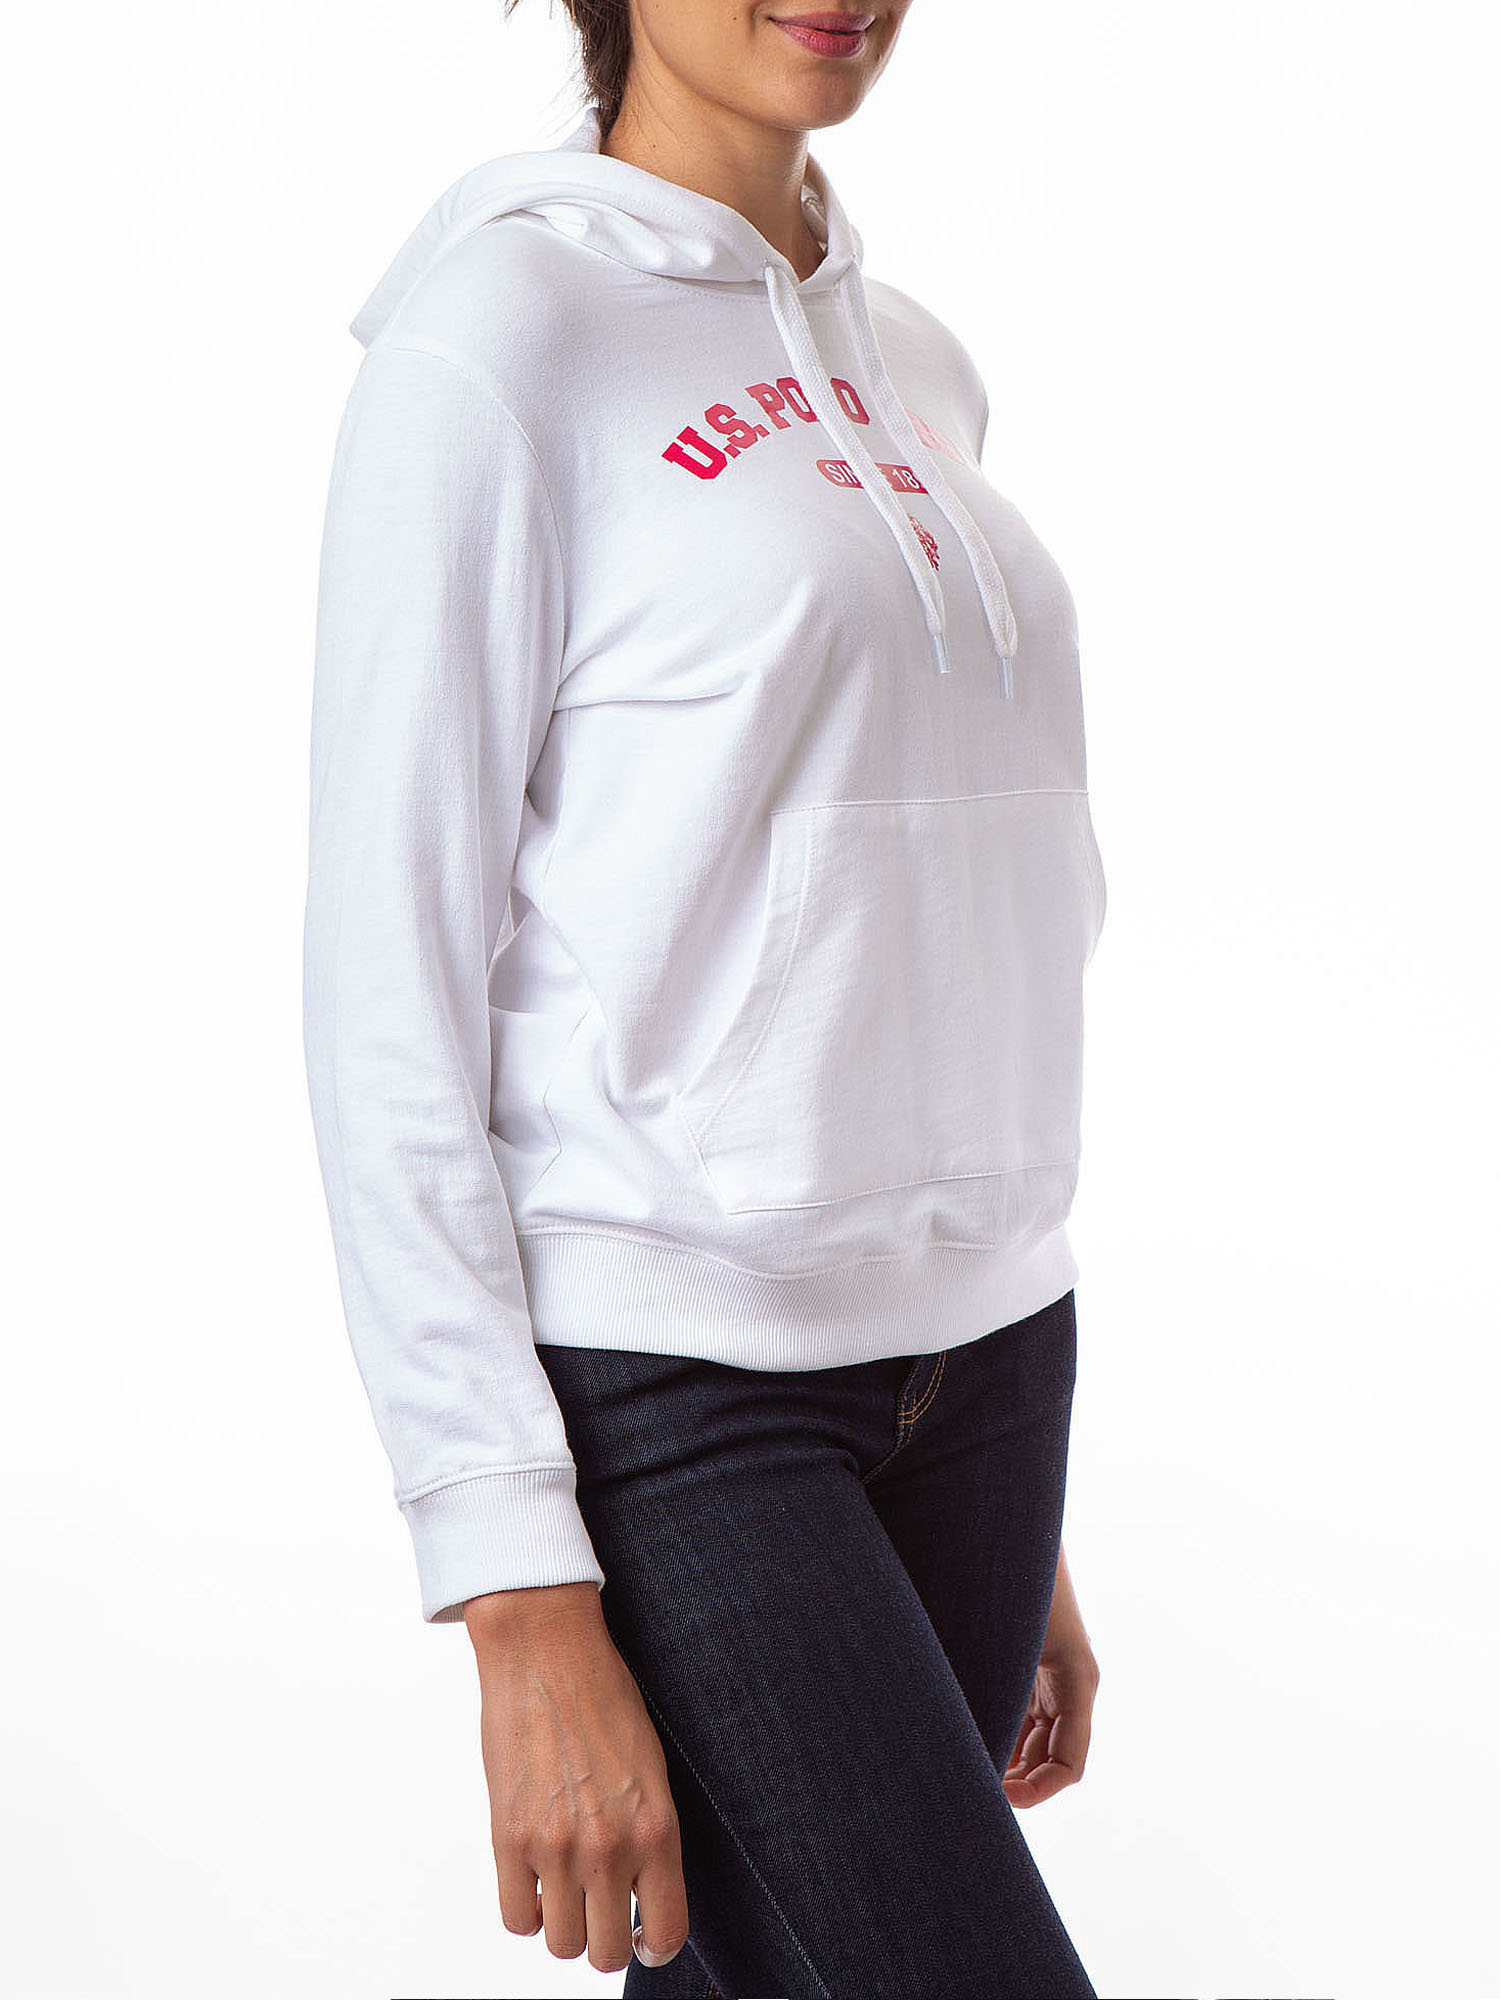 US Polo Assn. Women's Logo Sweatshirt Hoodie - image 3 of 3